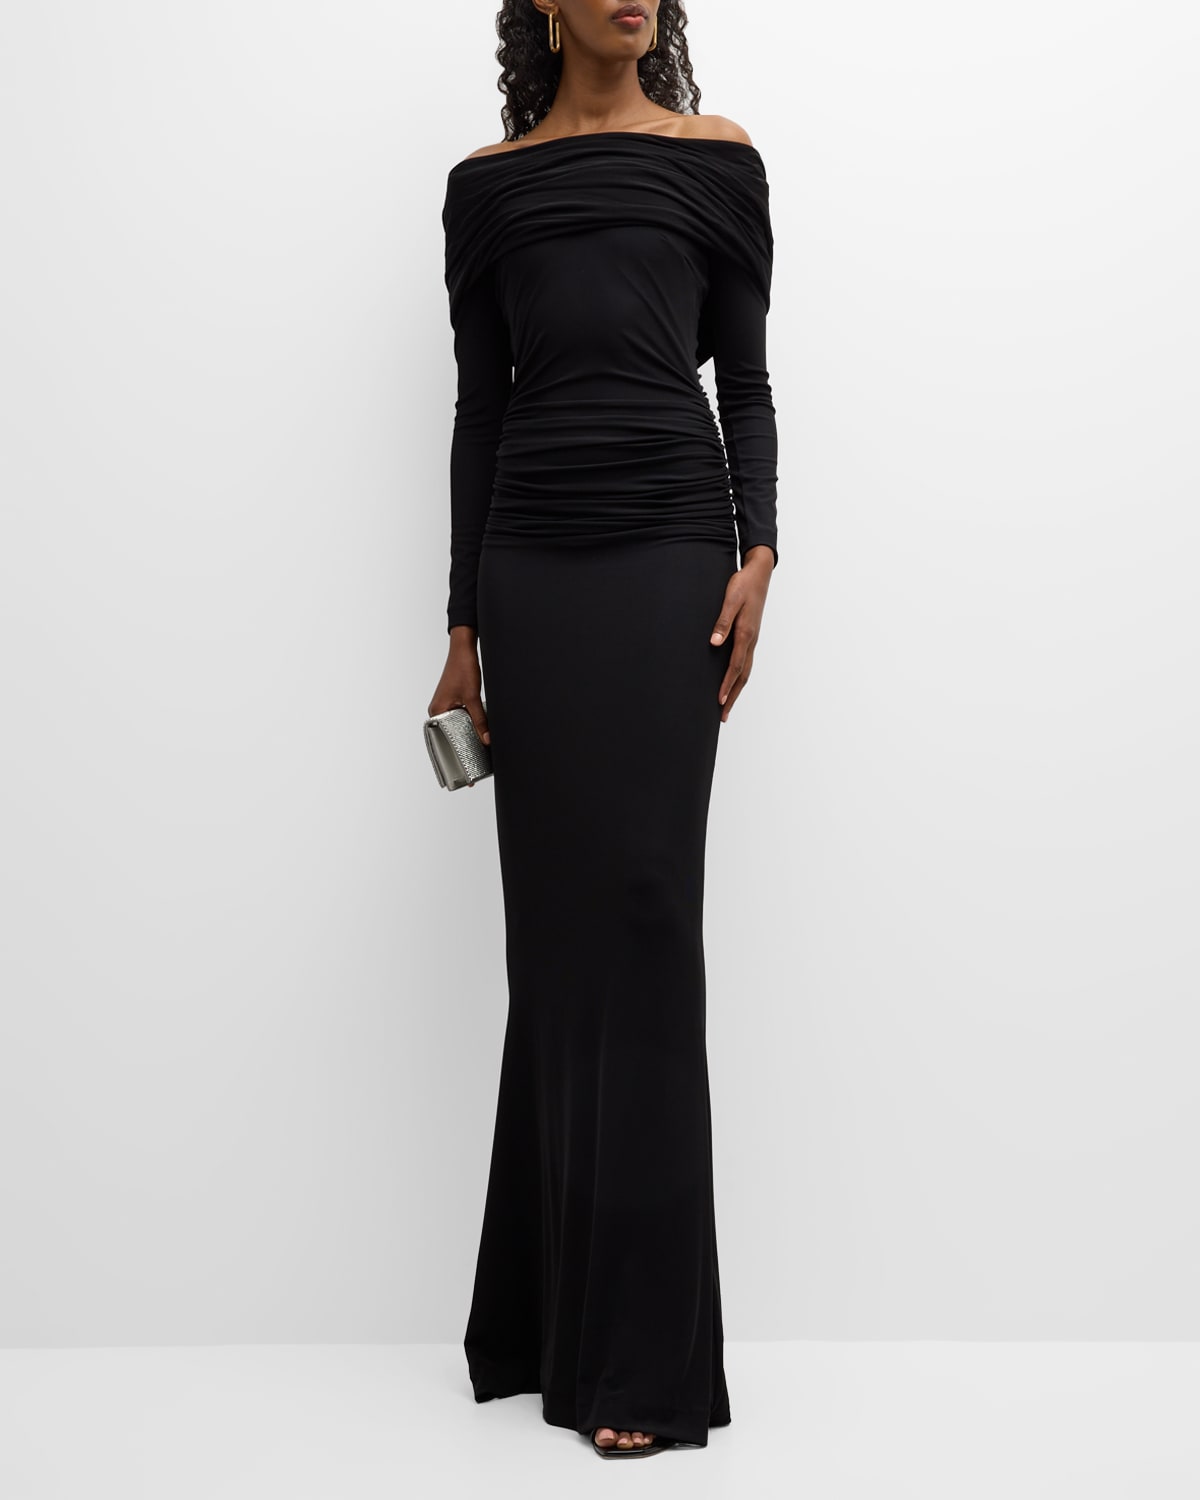 Chiara Boni La Petite Robe Ricky Off-Shoulder Two-Tone Gown | Neiman Marcus